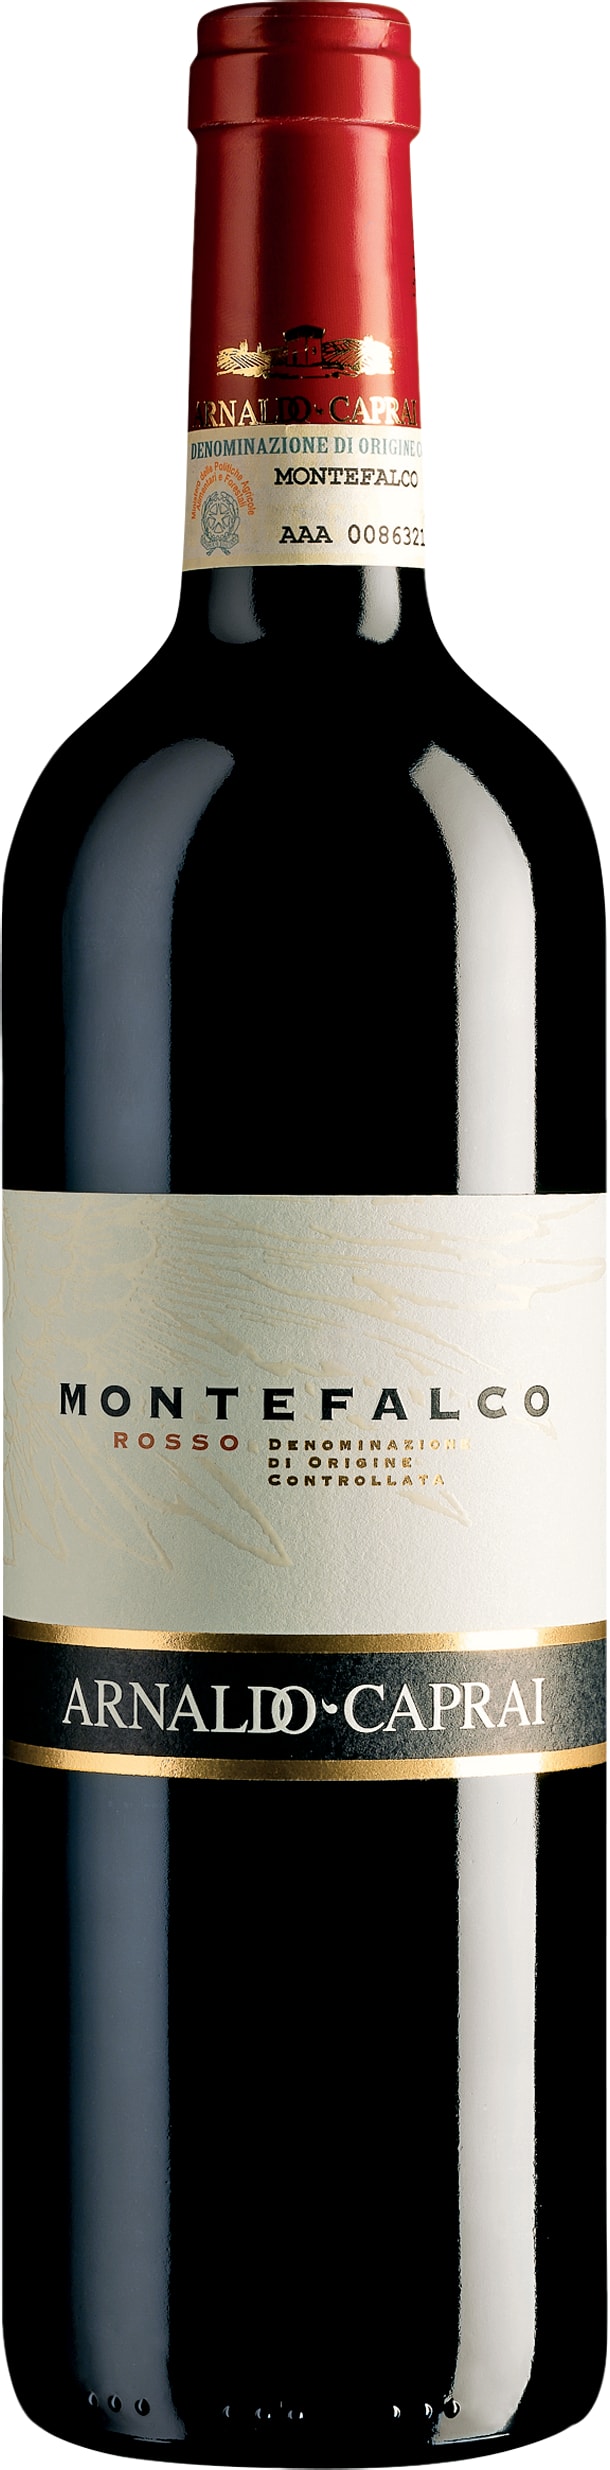 Arnaldo Caprai Montefalco Rosso 2019 75cl - Buy Arnaldo Caprai Wines from GREAT WINES DIRECT wine shop